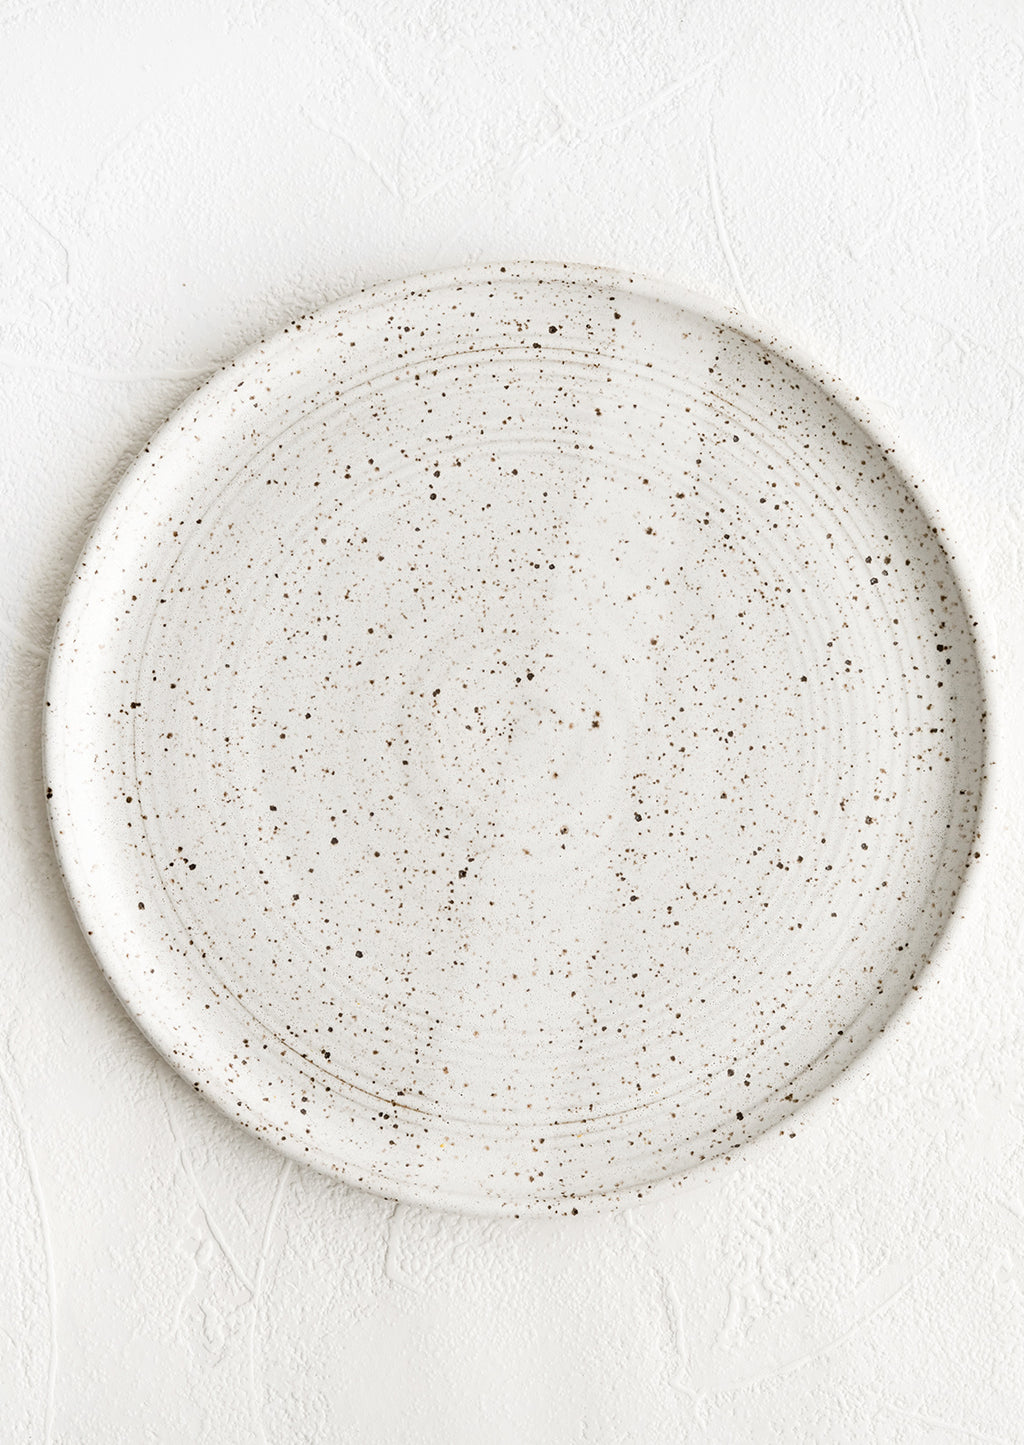 Speckled White / Dinner Plate: A speckled white ceramic dinner plate.